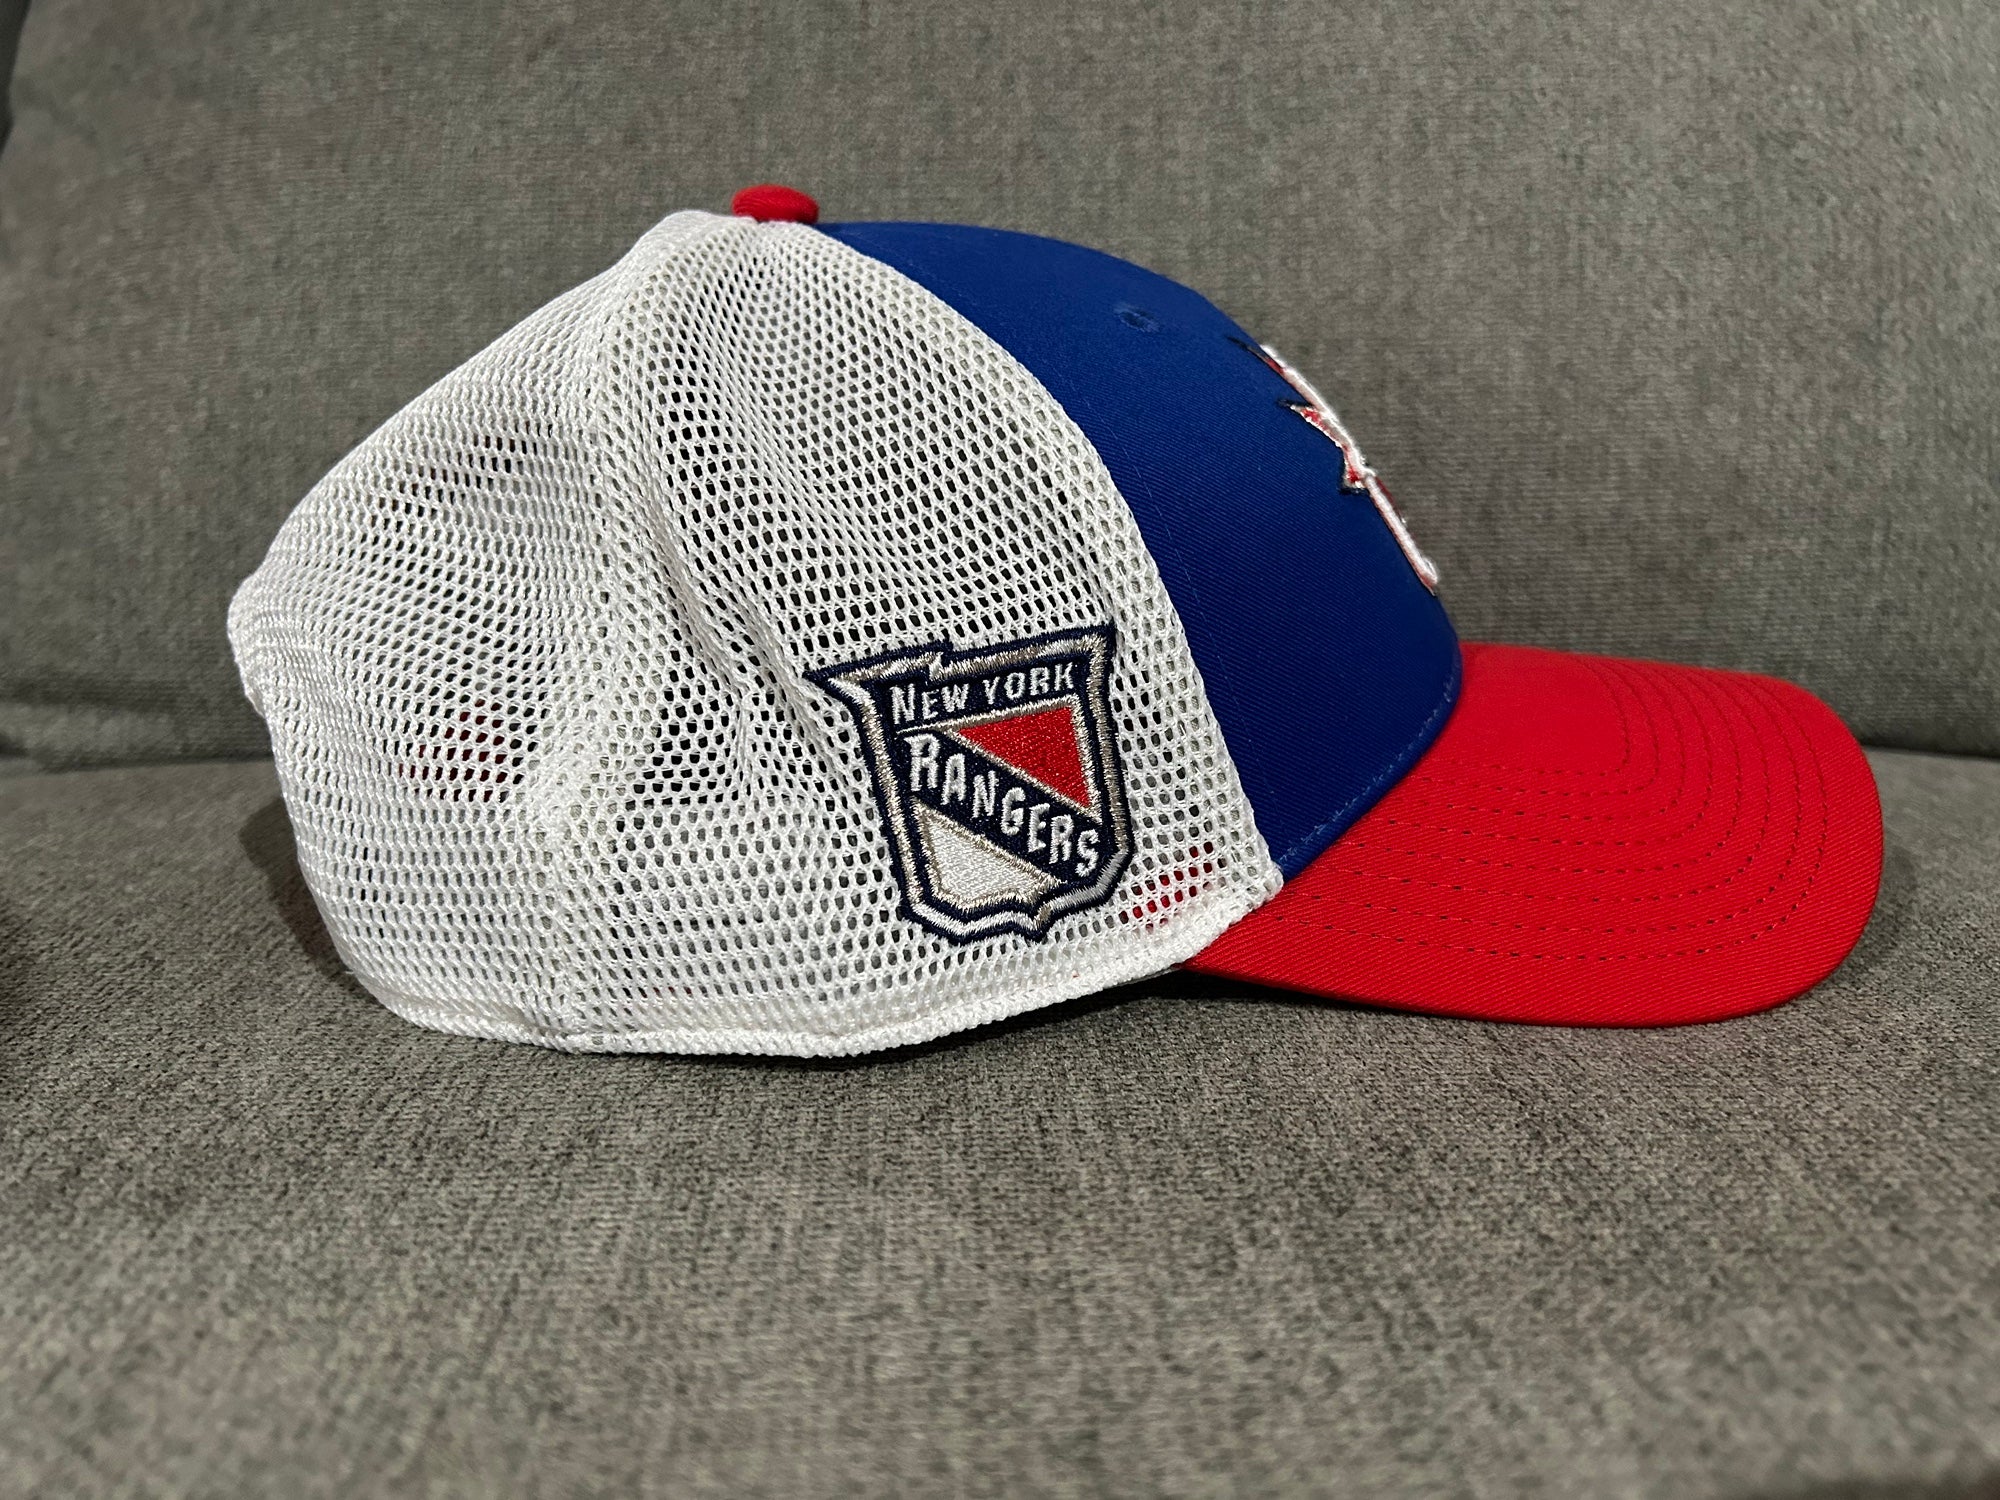 Mika Zibanejad New York Rangers Fanatics Authentic Pro HAT Player